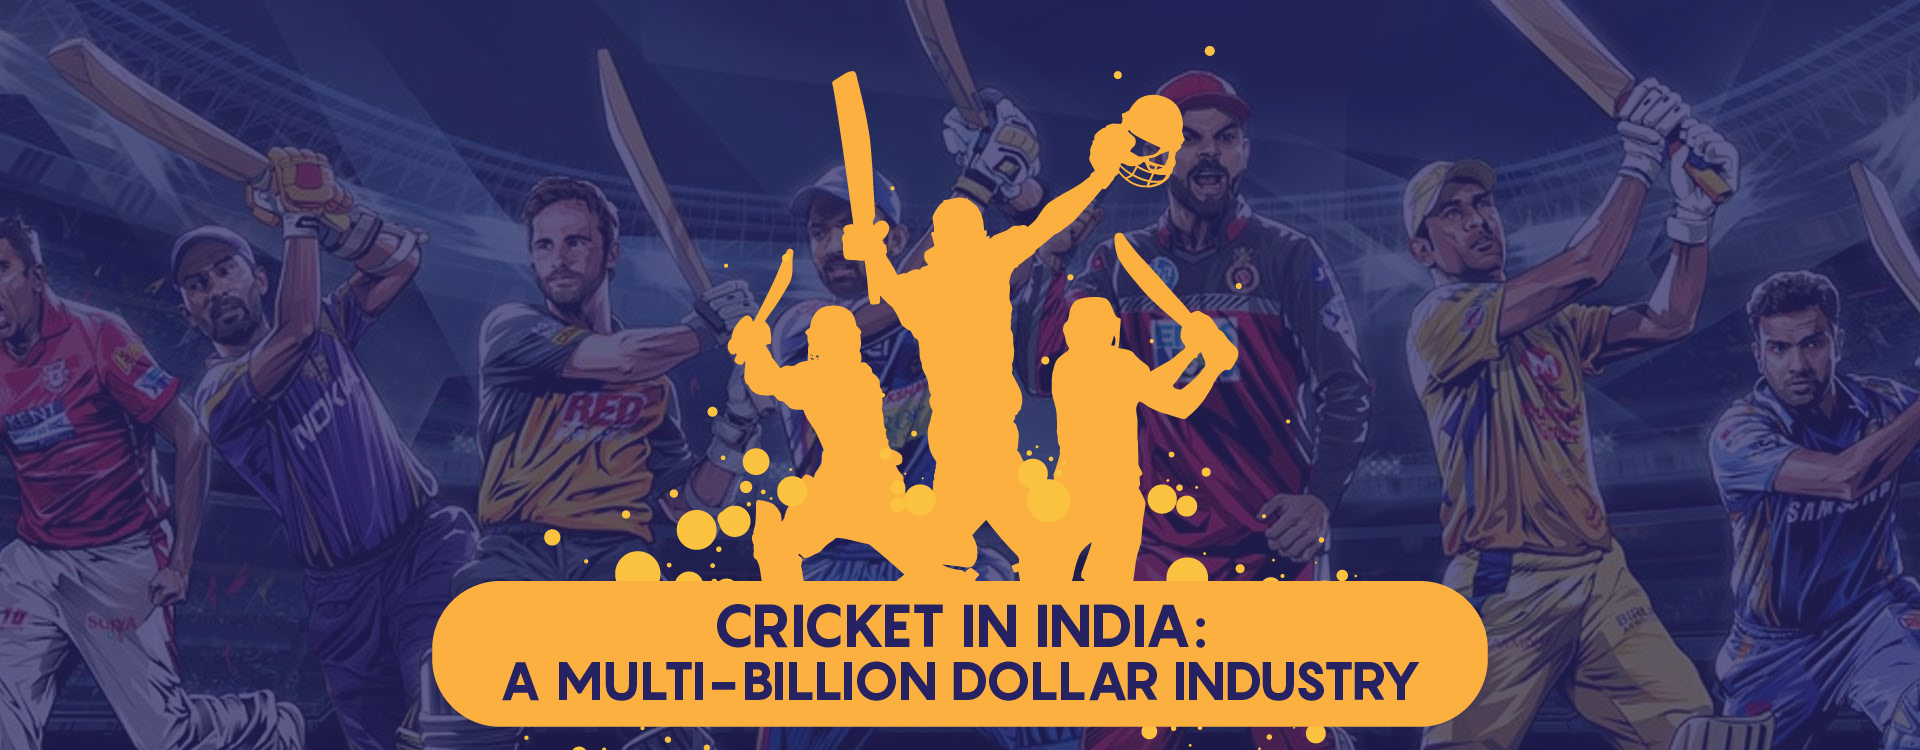 Indian Premier League (IPL)- largest sports league in the world